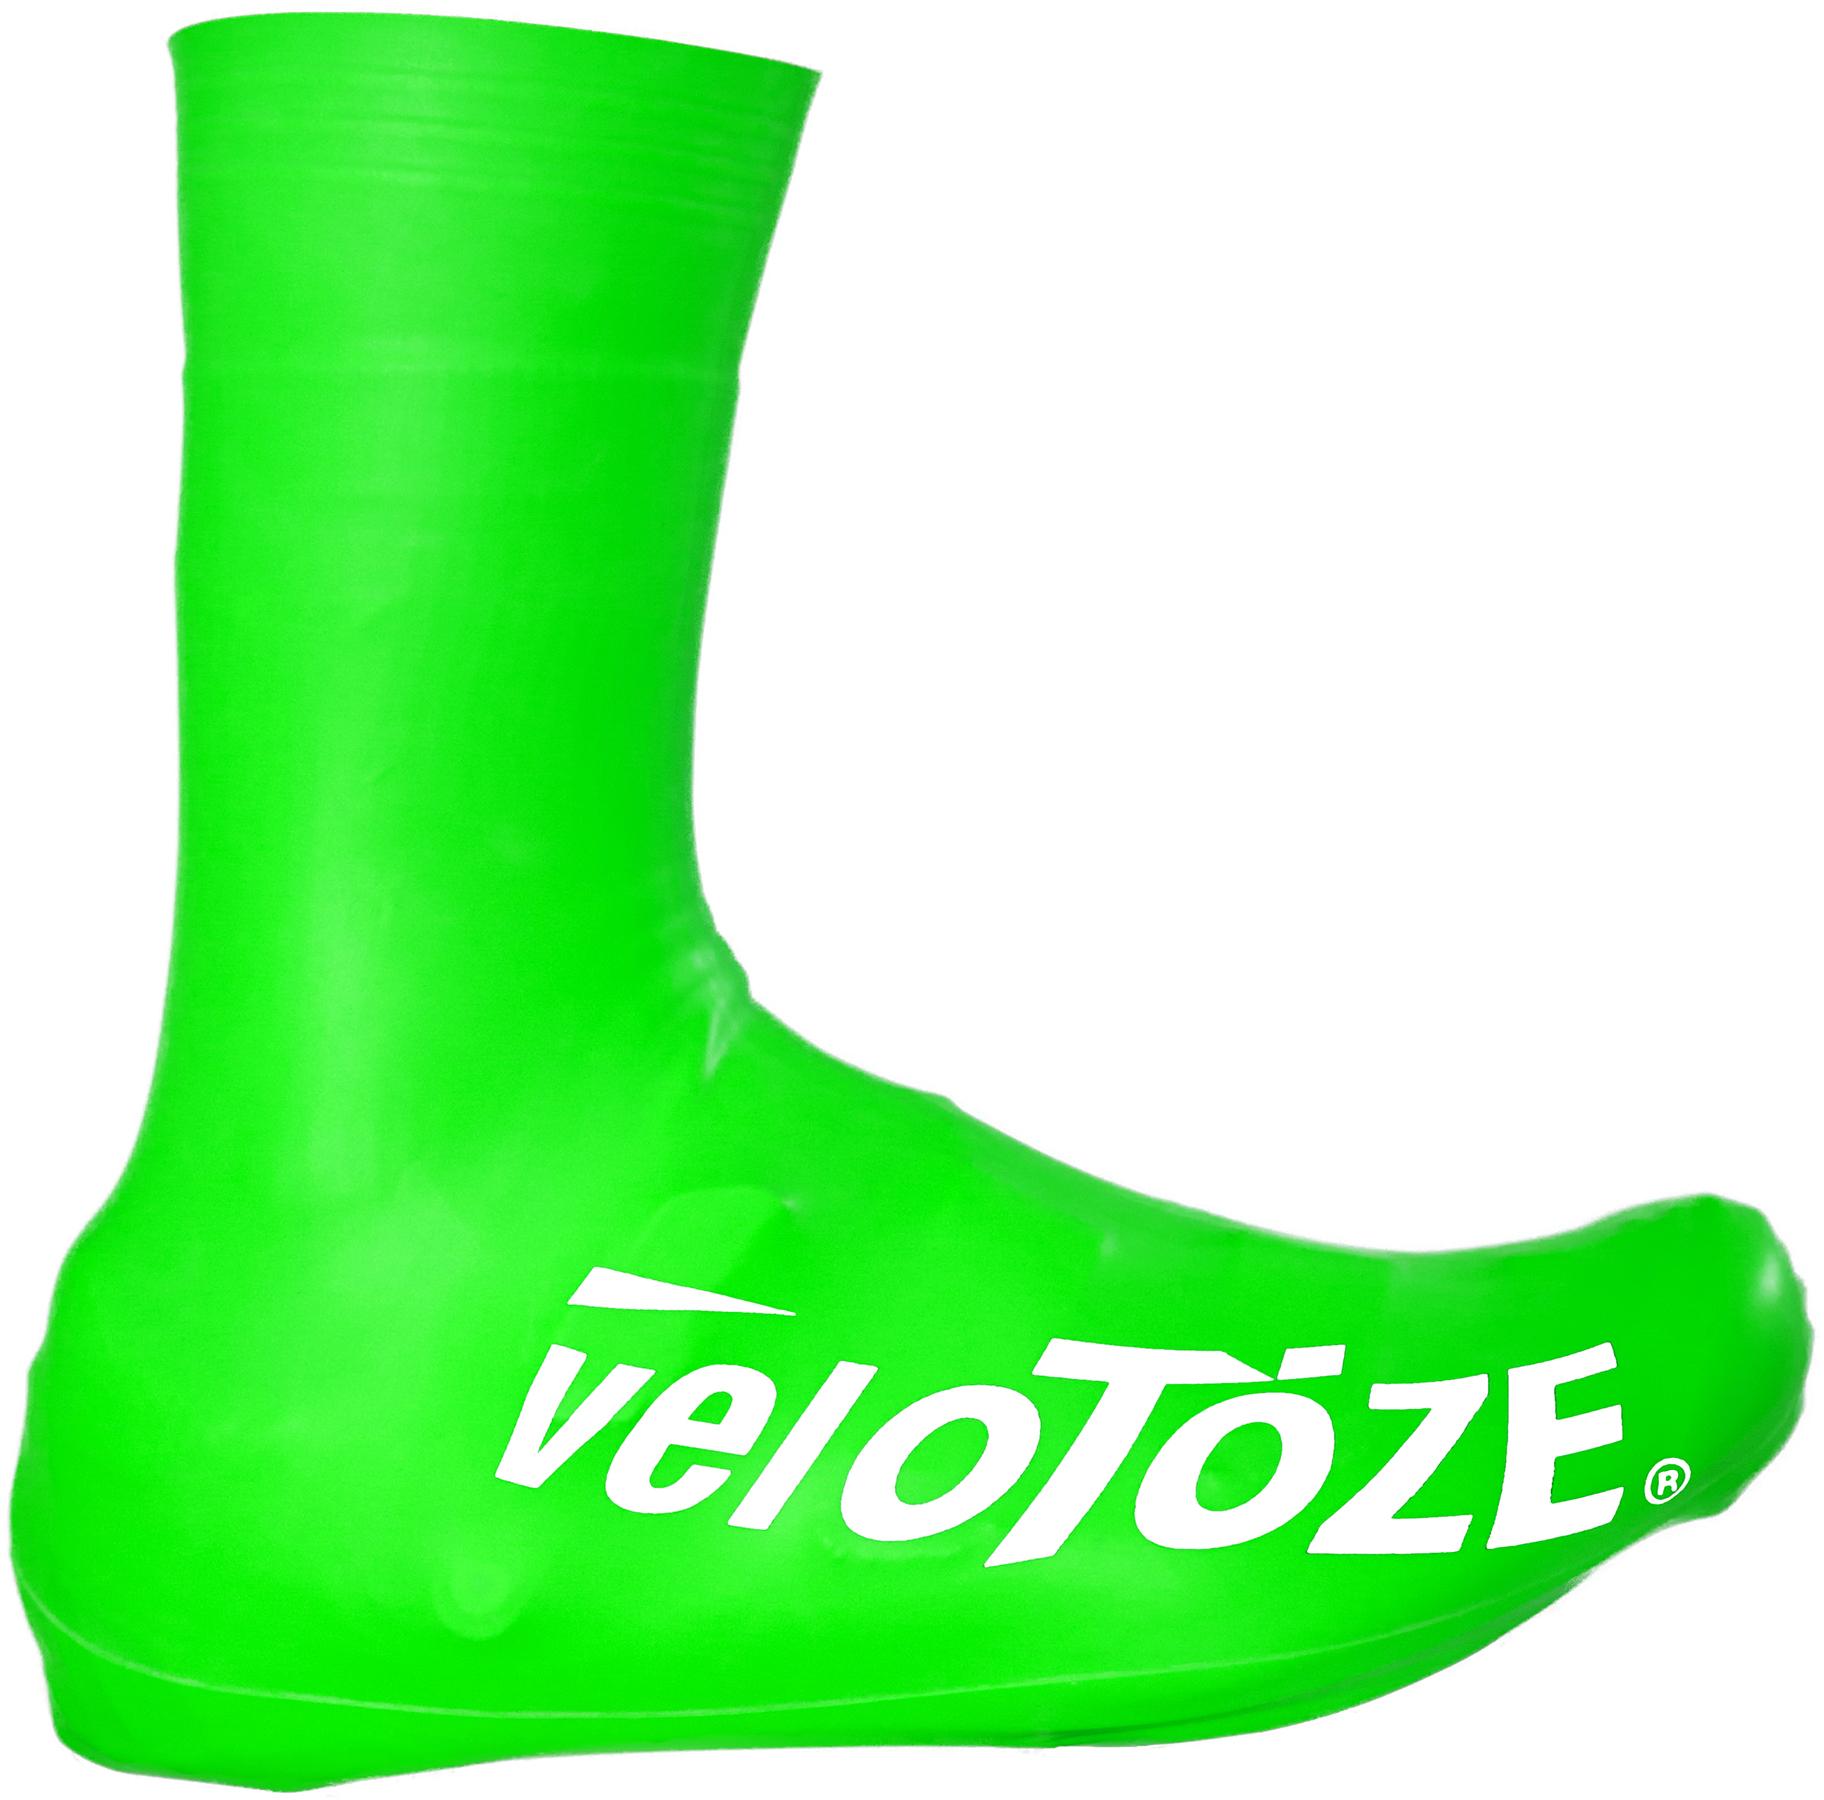 Velotoze Tall Shoe Covers 2.0 - Green